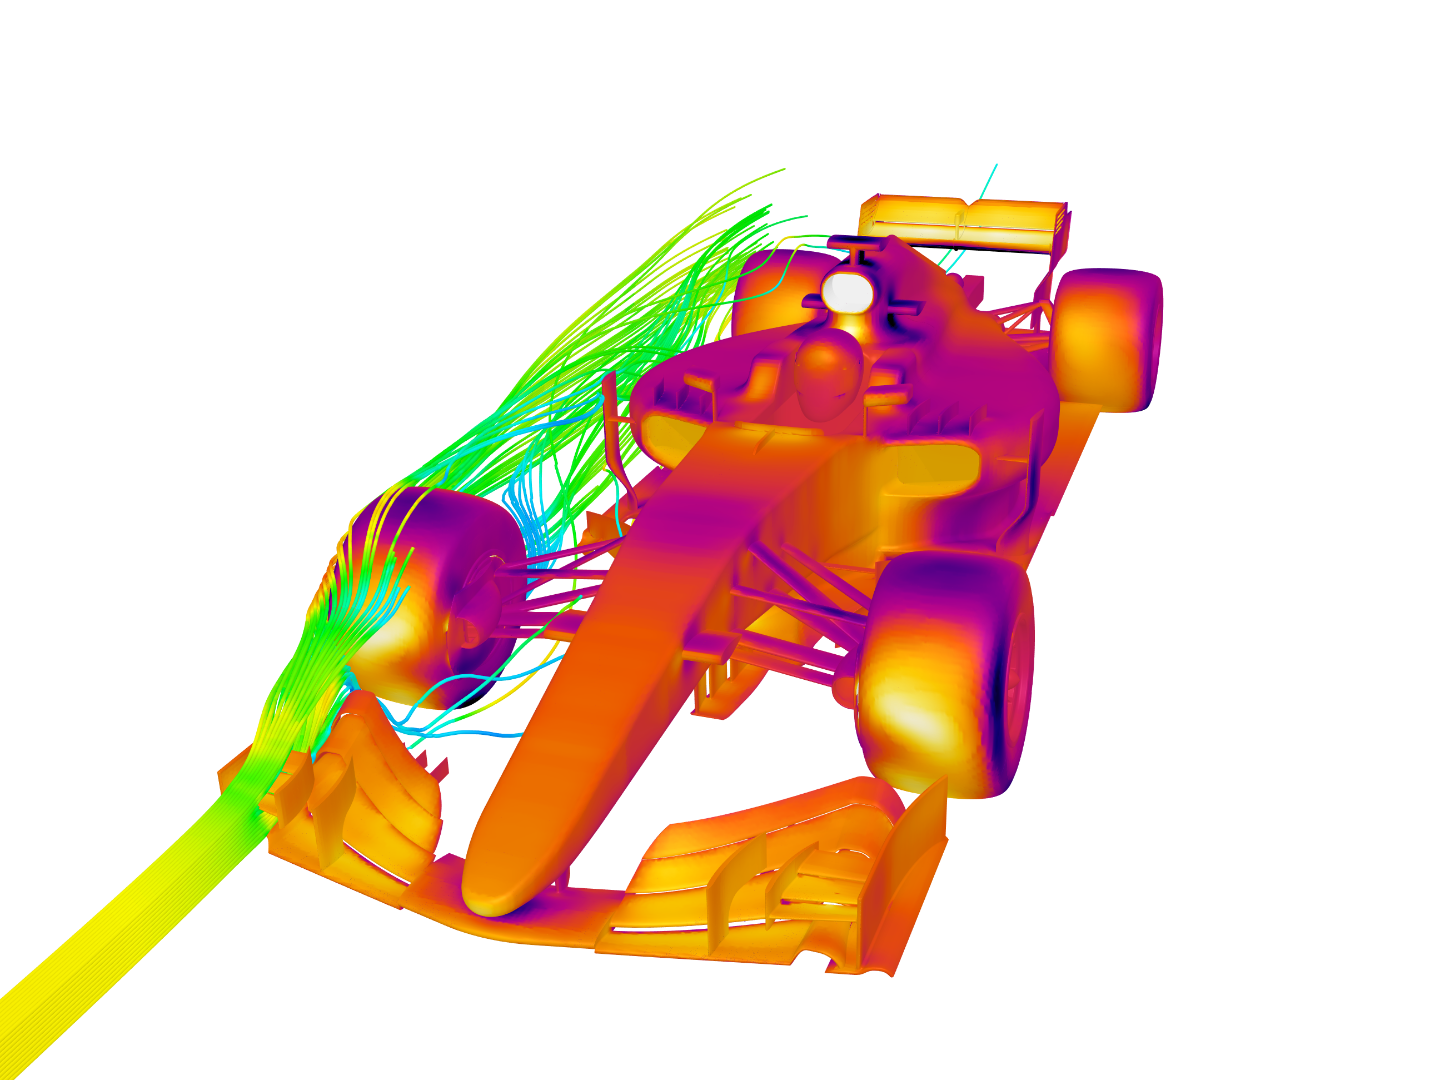 F1 simulation image